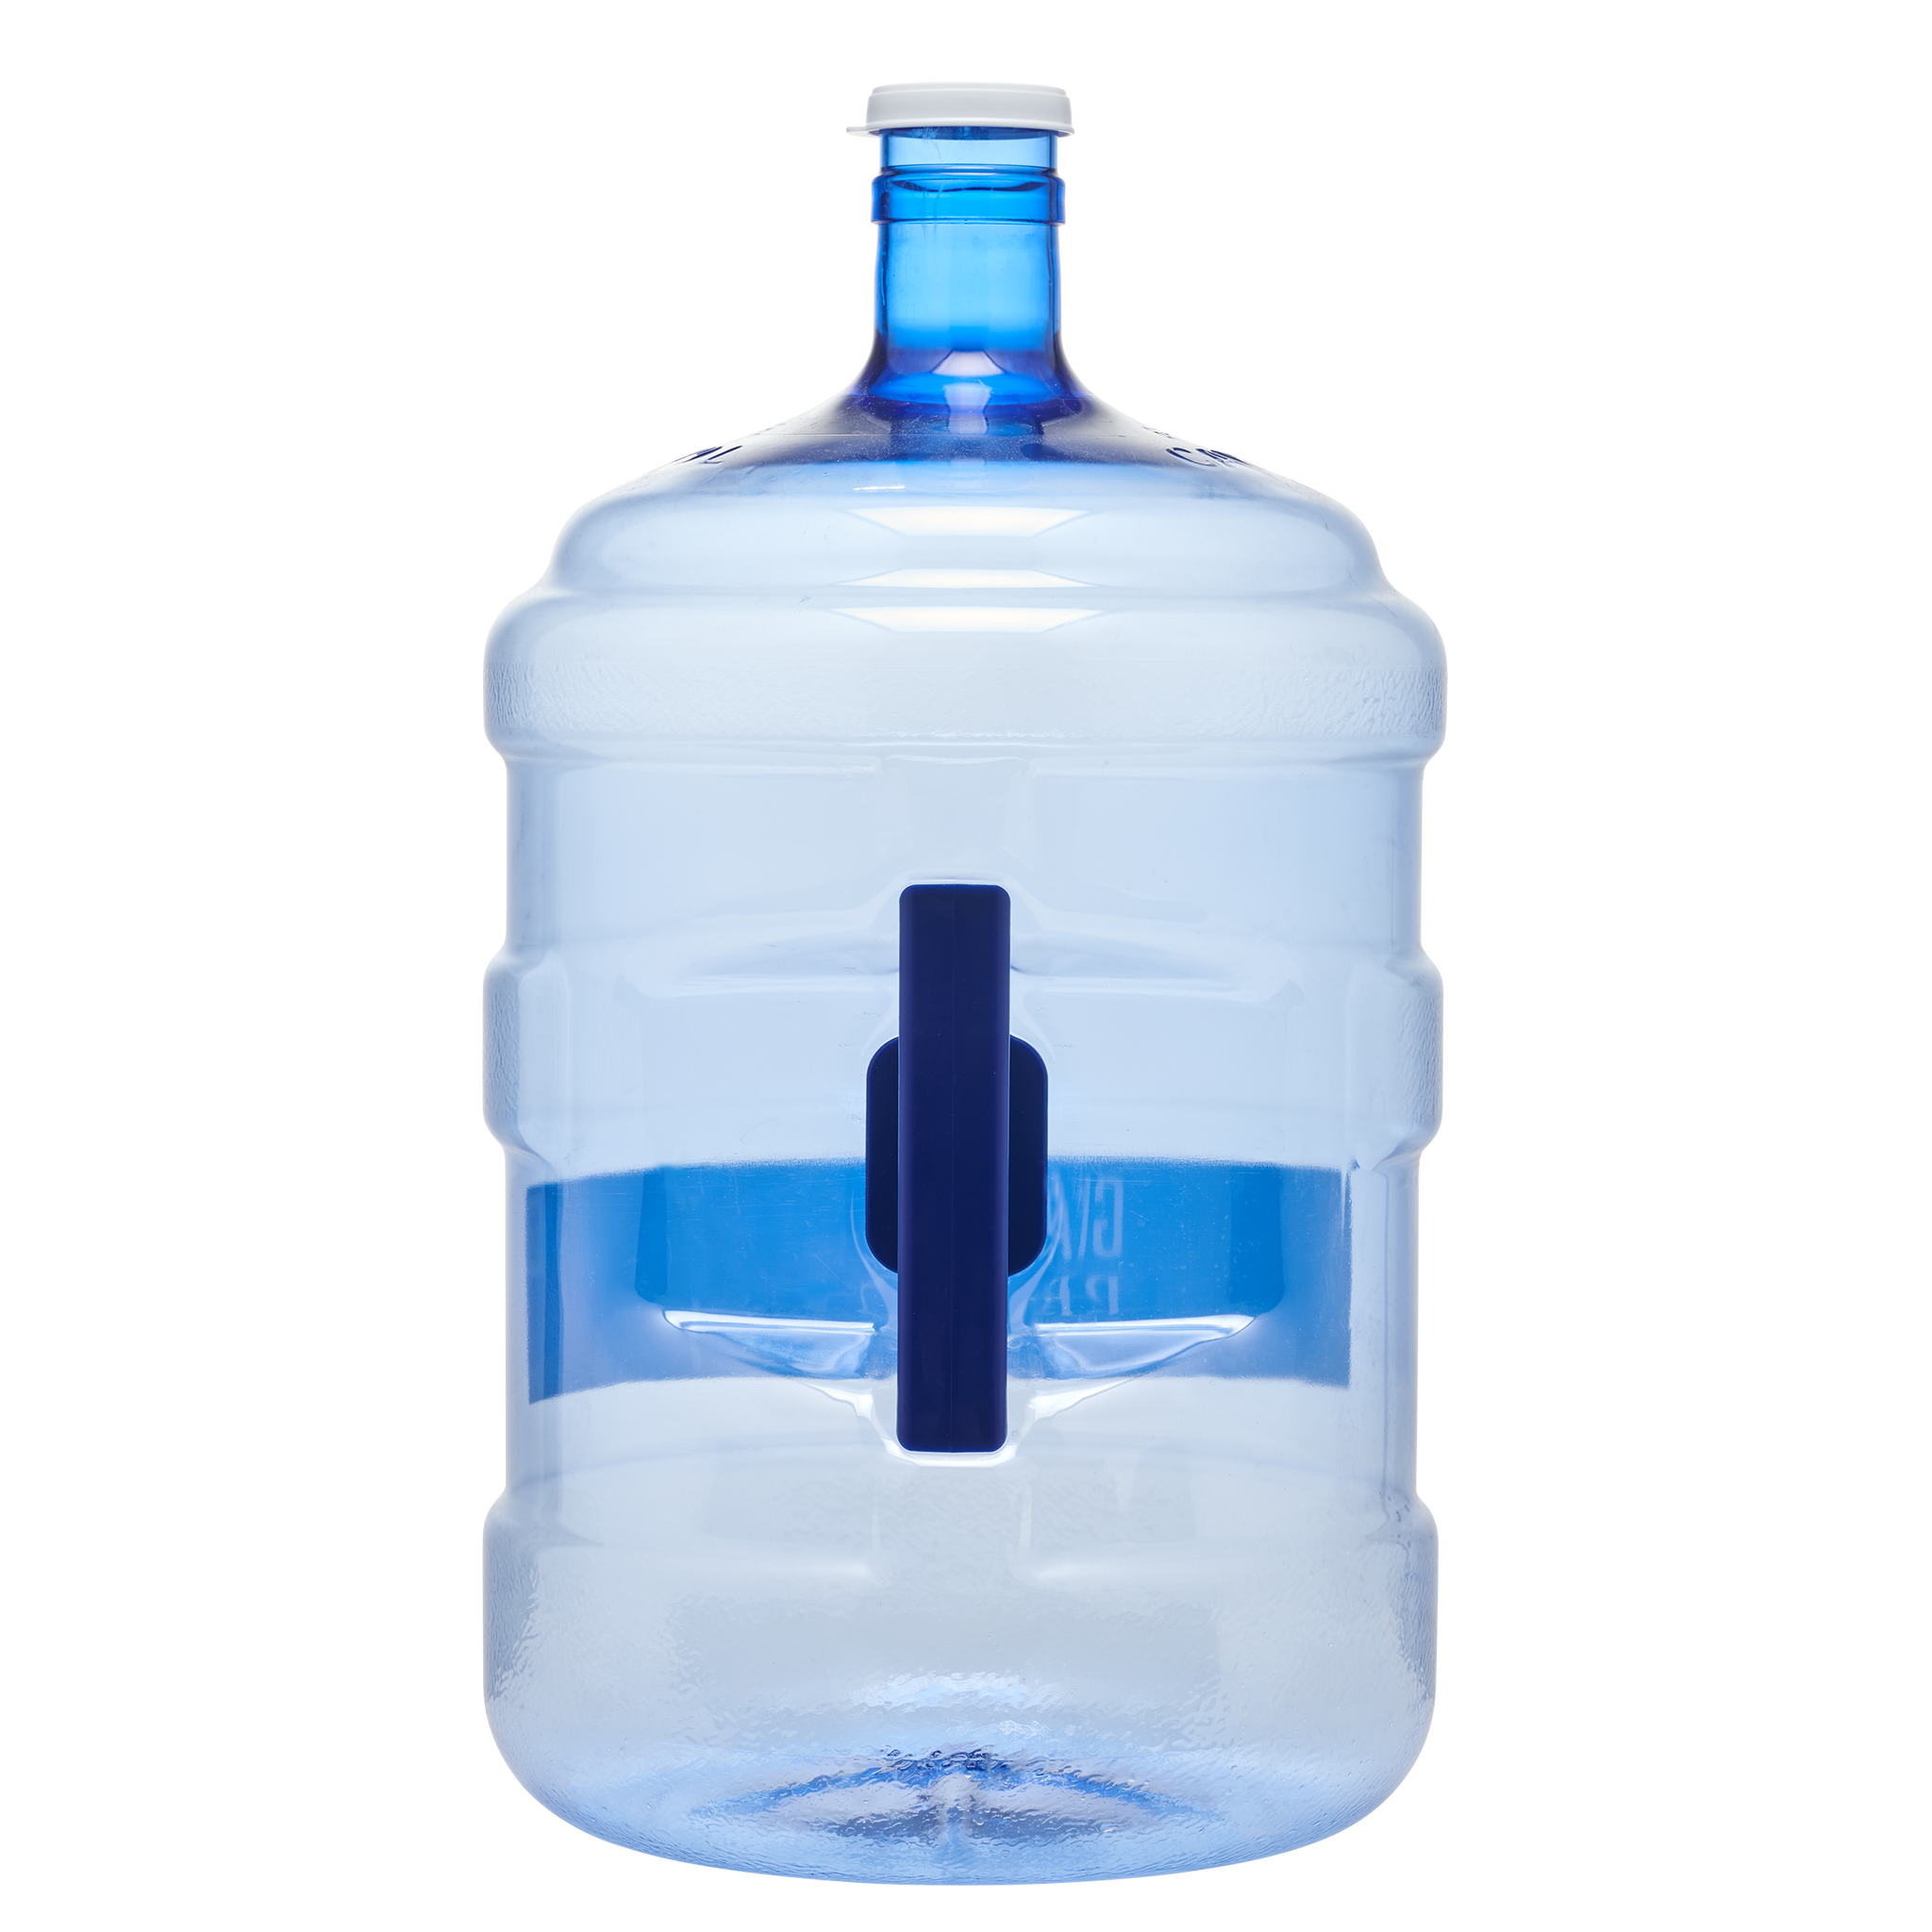 empty water cooler bottles for sale